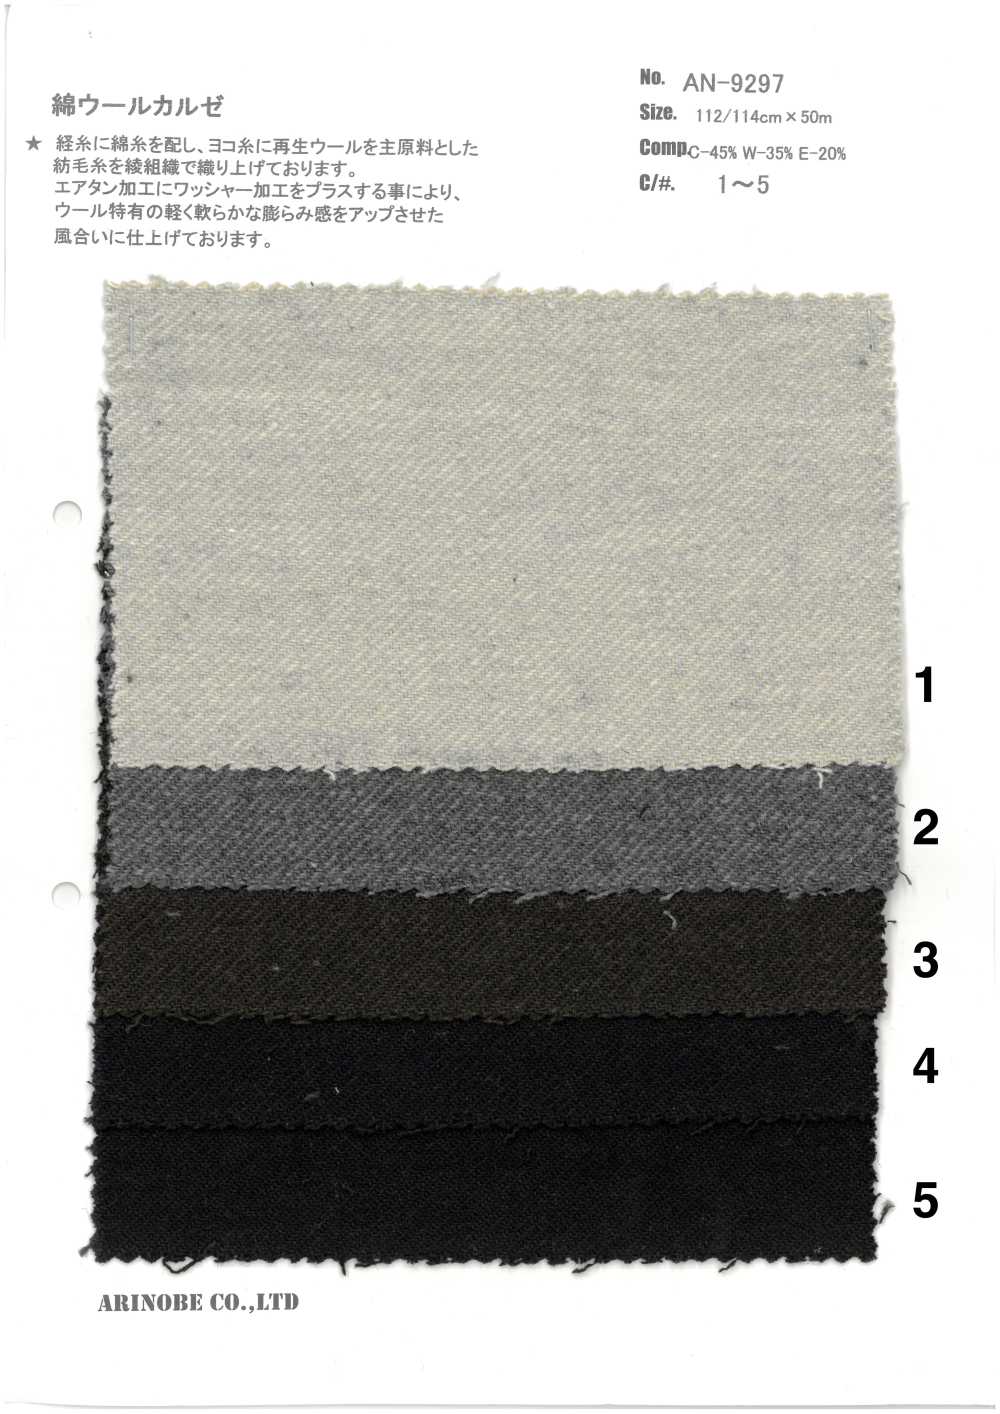 AN-9297 Watte Calze[Textilgewebe] ARINOBE CO., LTD.